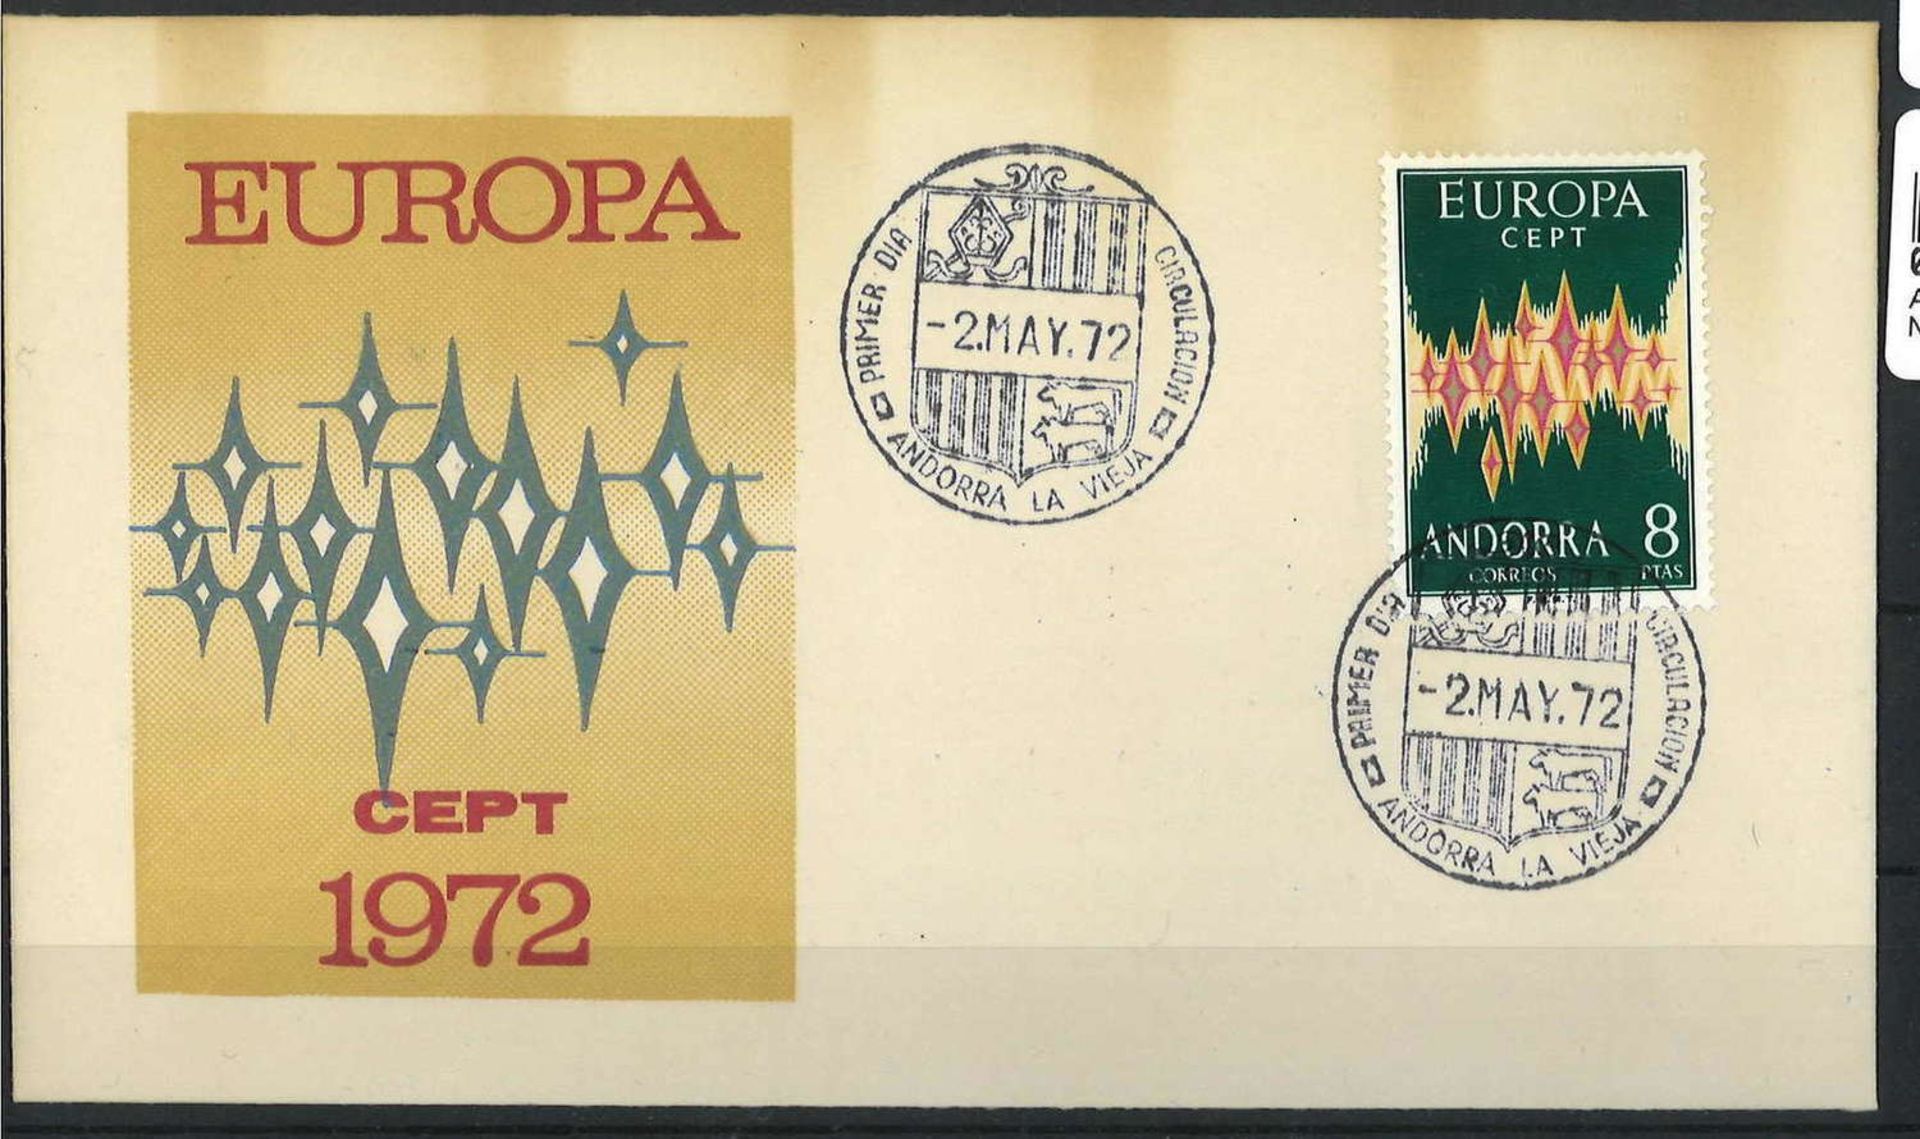 Andorra, spanische Post, Michel Nr 71, FDCLuxembourg 1859, Michel No. 3, stamped. Michel value 550